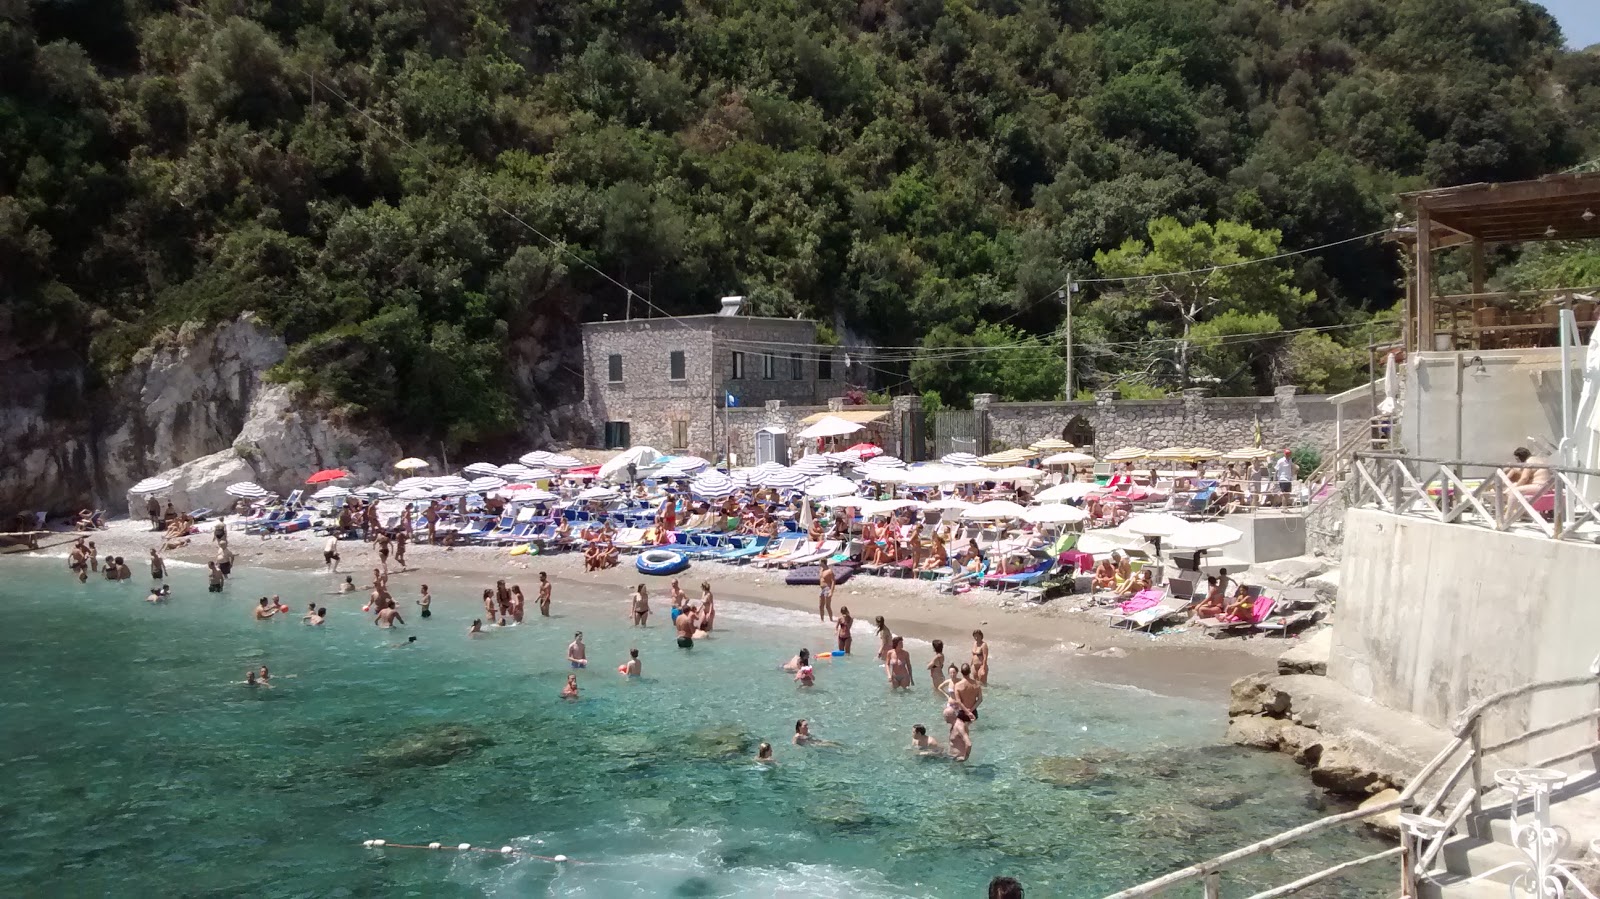 Foto van Spiaggia di Recommone met gemiddeld niveau van netheid